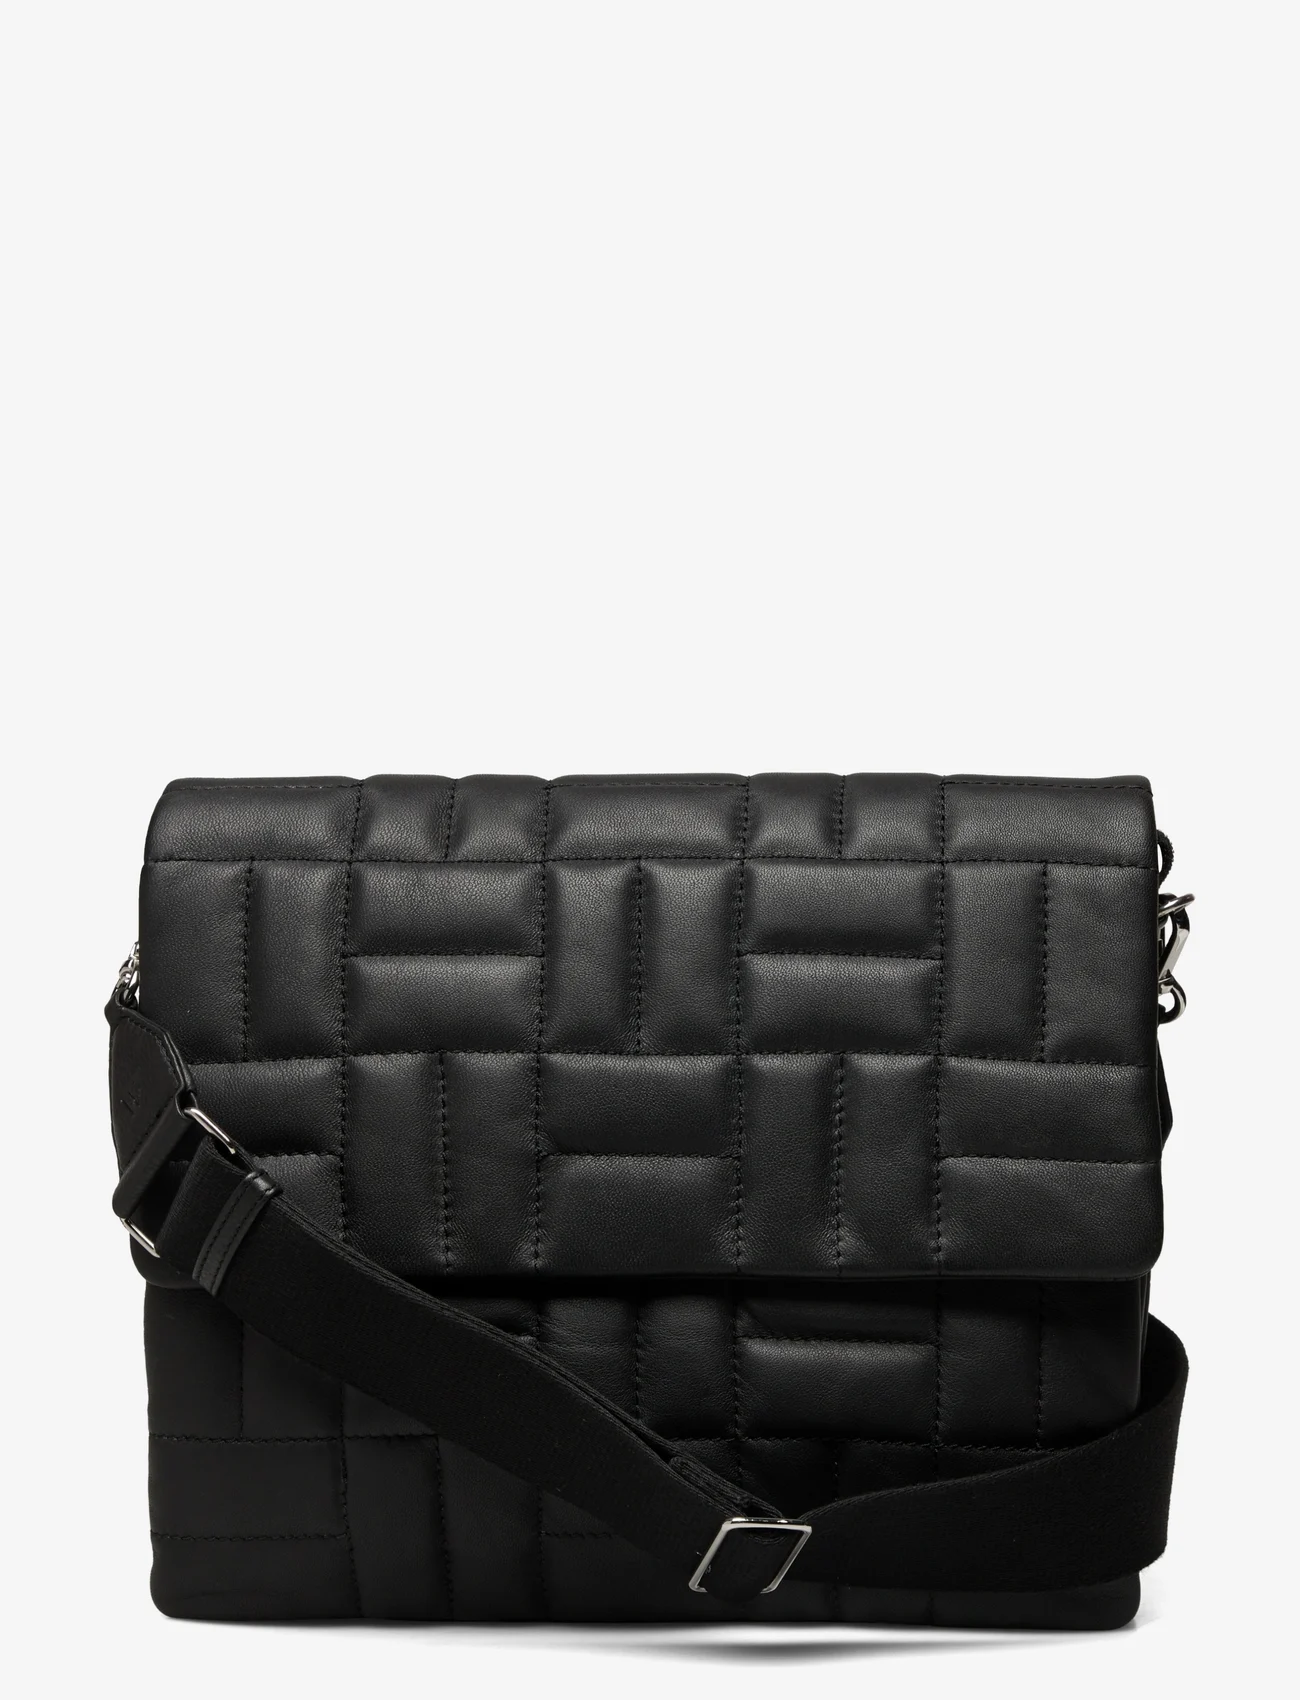 Markberg - NormaMBG Crossbody Bag, Bricks - geburtstagsgeschenke - black w/black - 0